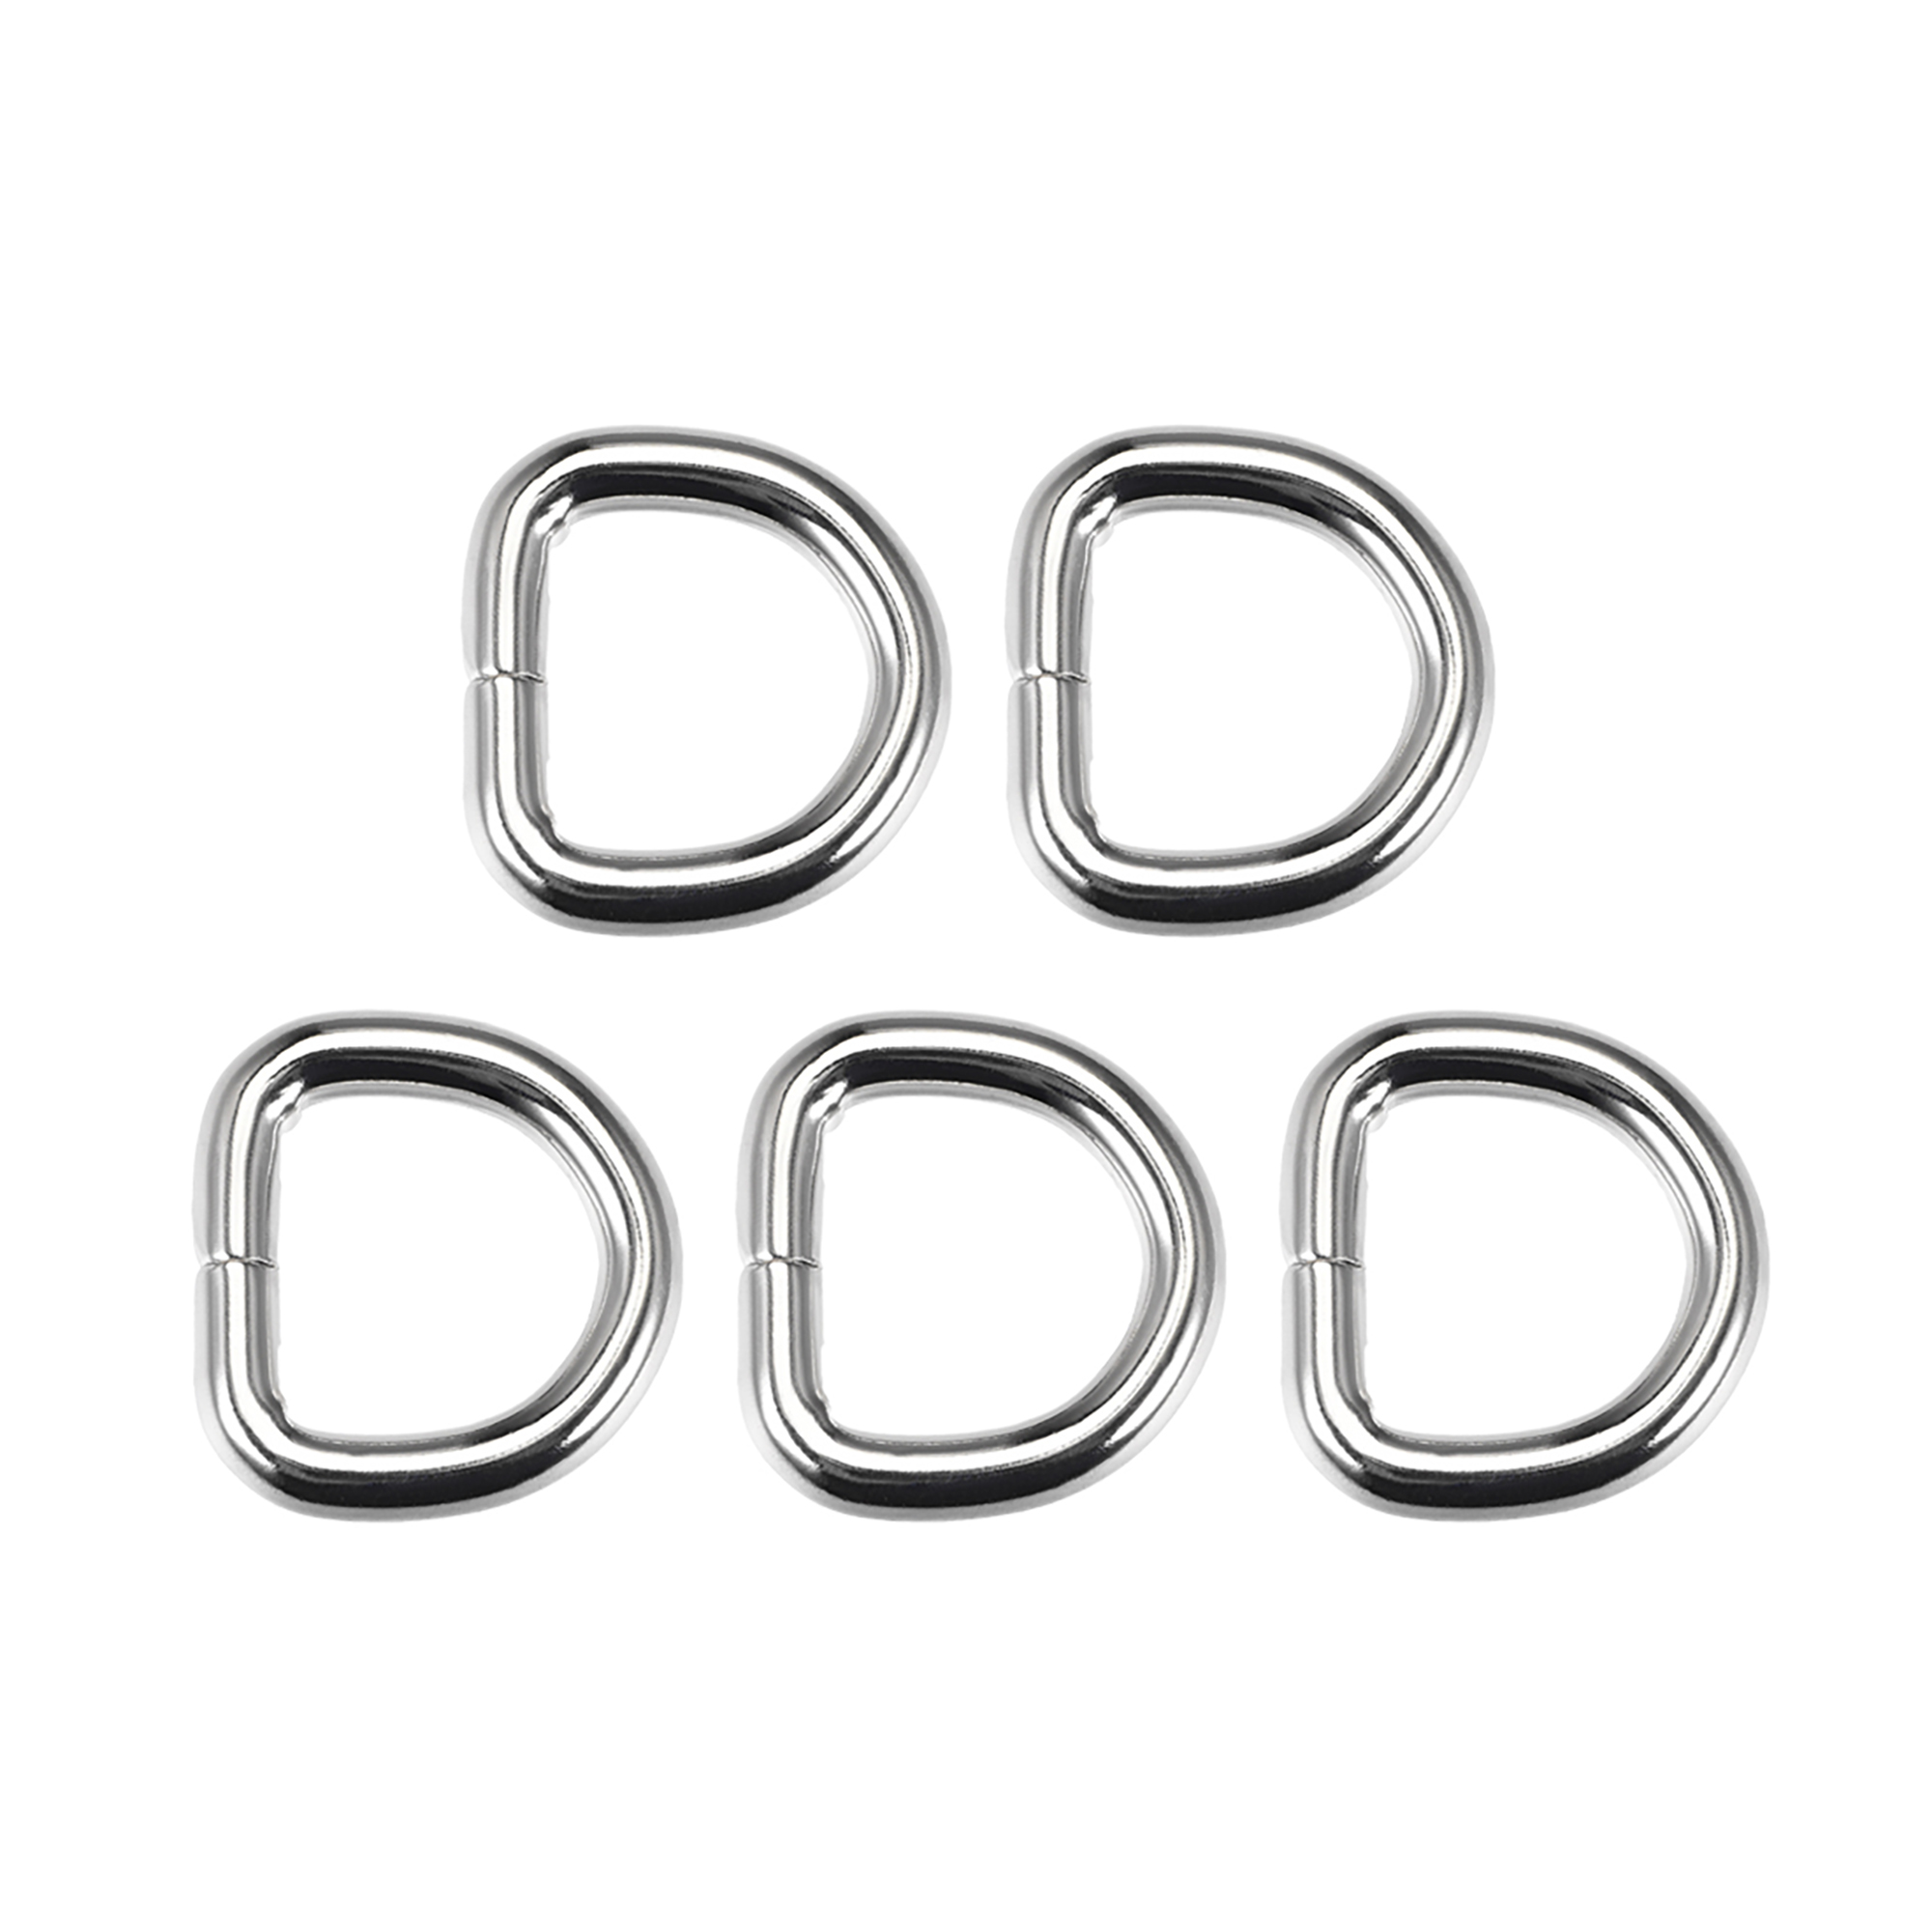 5 Pcs D Ring Buckle 0.63 Inch Metal Semi-Circular D-Ring Silver Tone ...